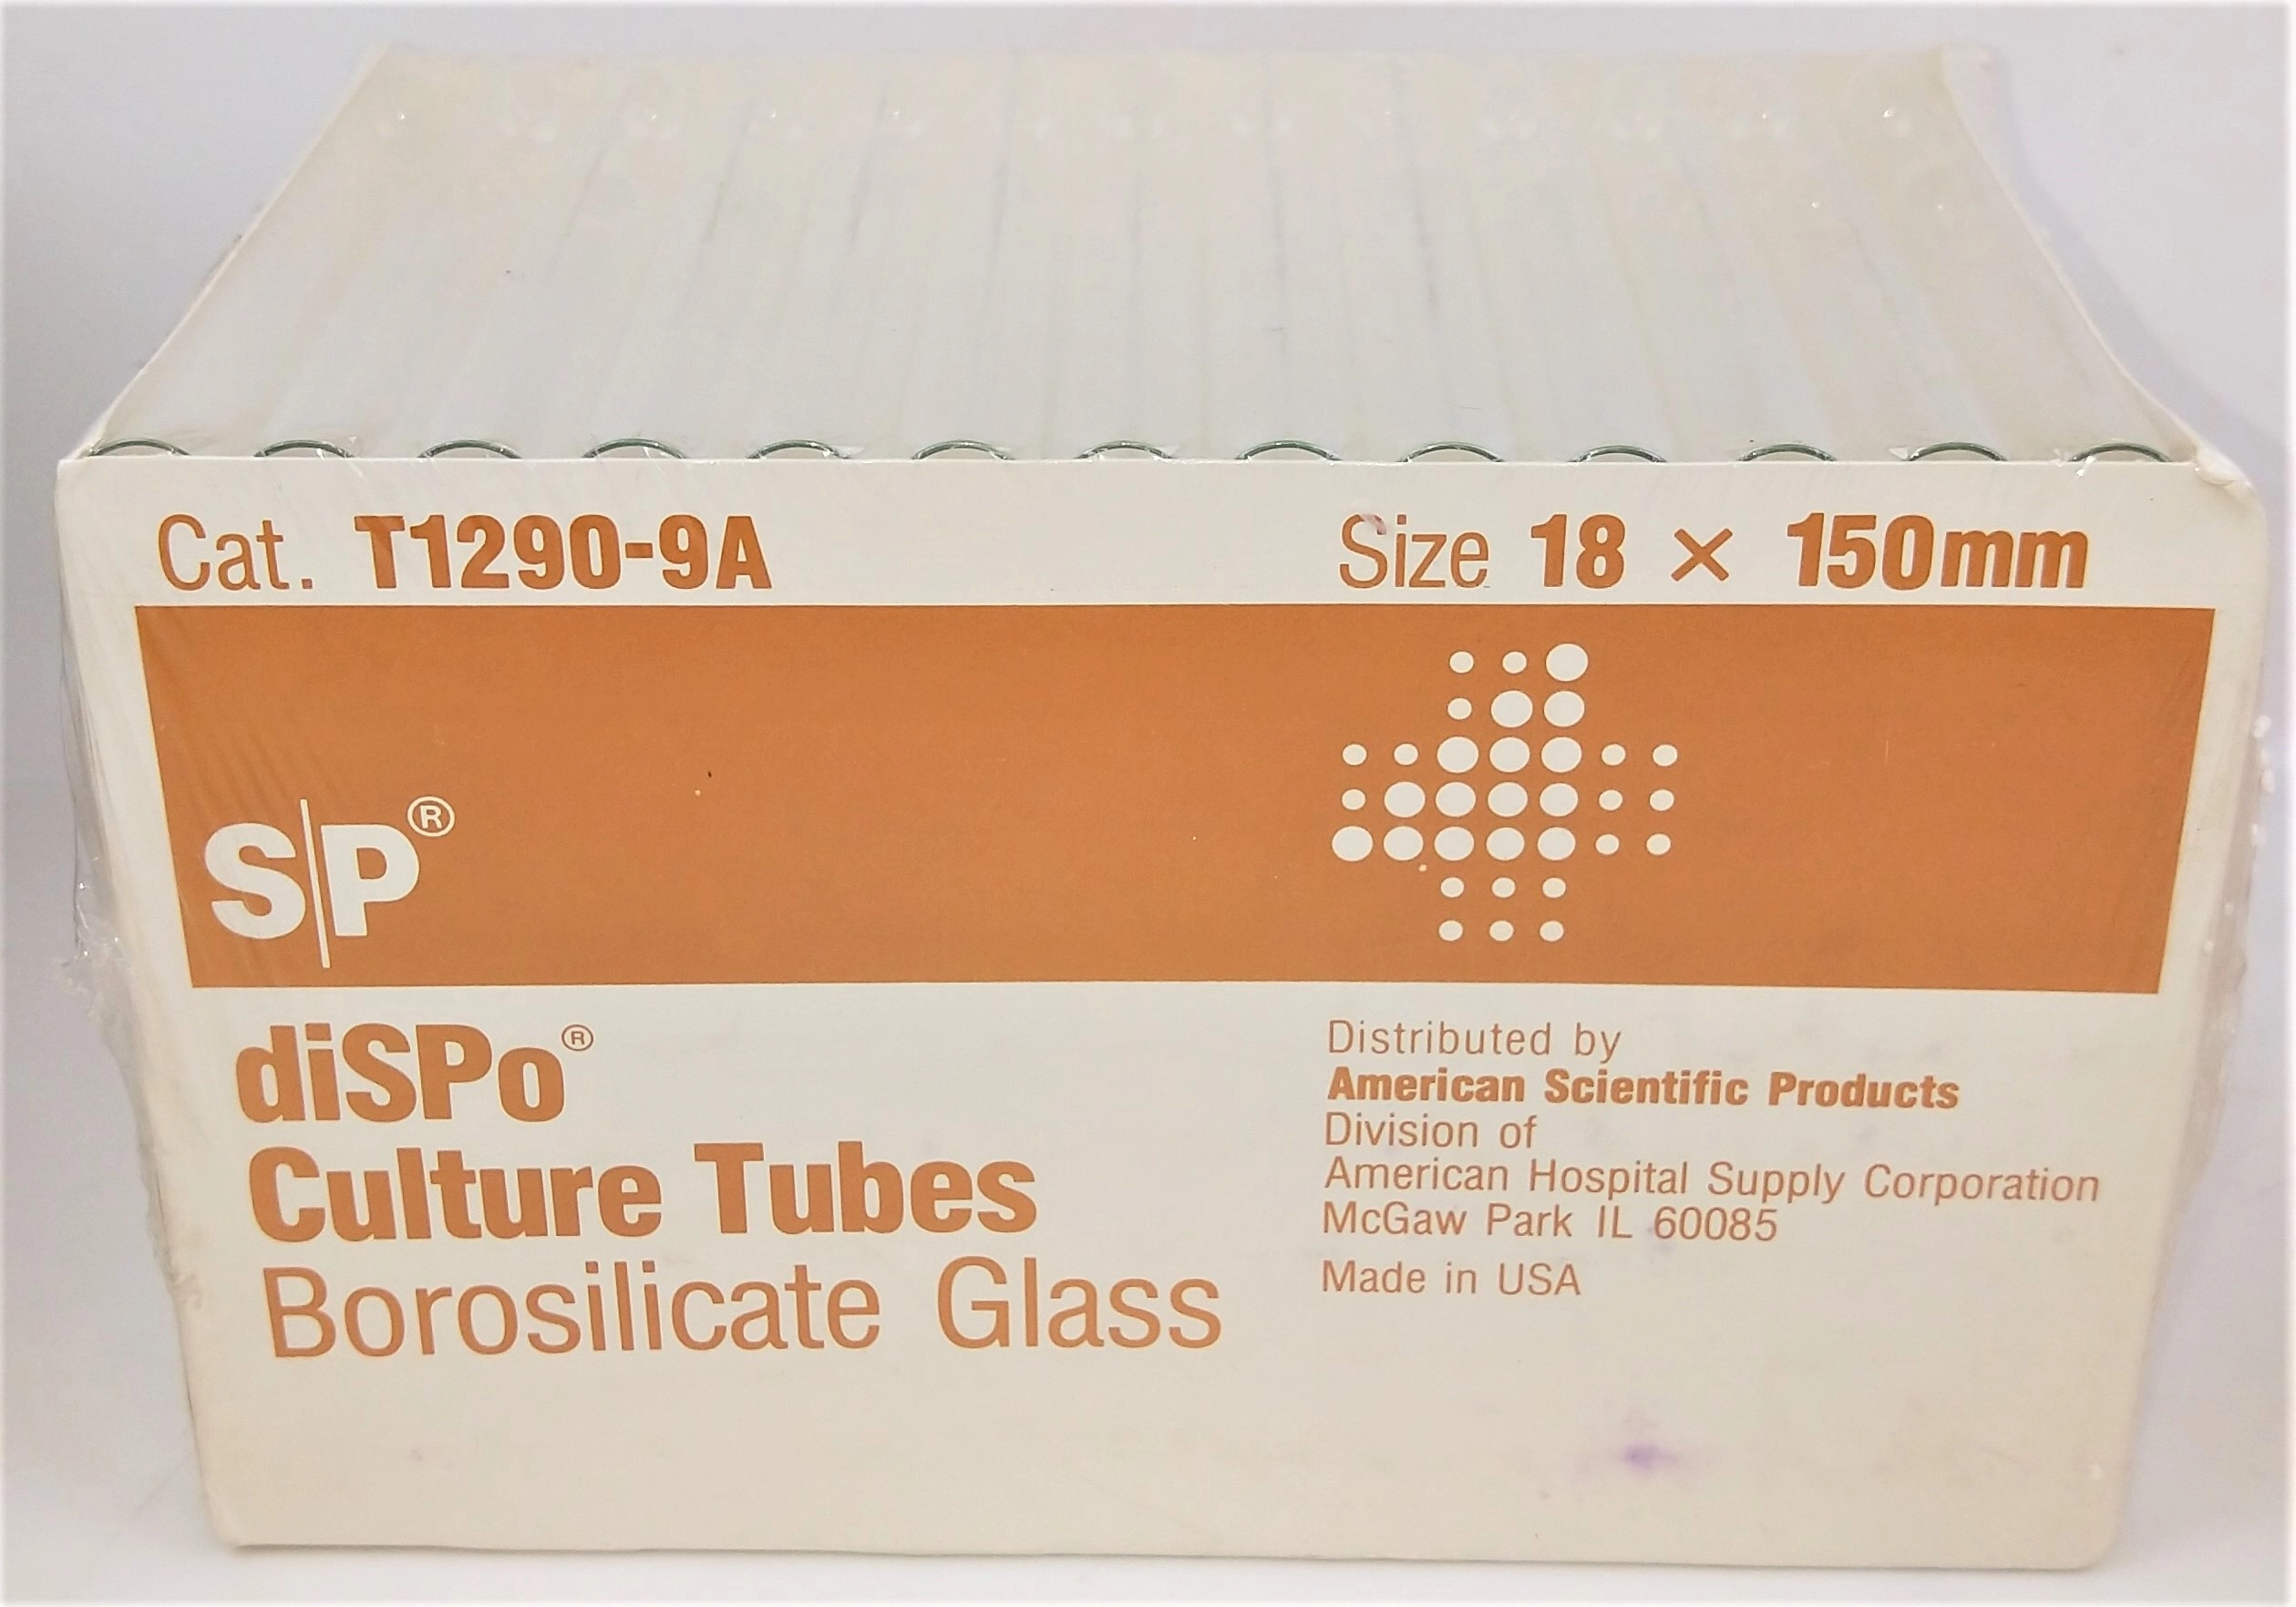 S/P (Baxter) T1290-9A diSPo Culture Tubes - 18 x 150mm - 28mL (Box of 130)